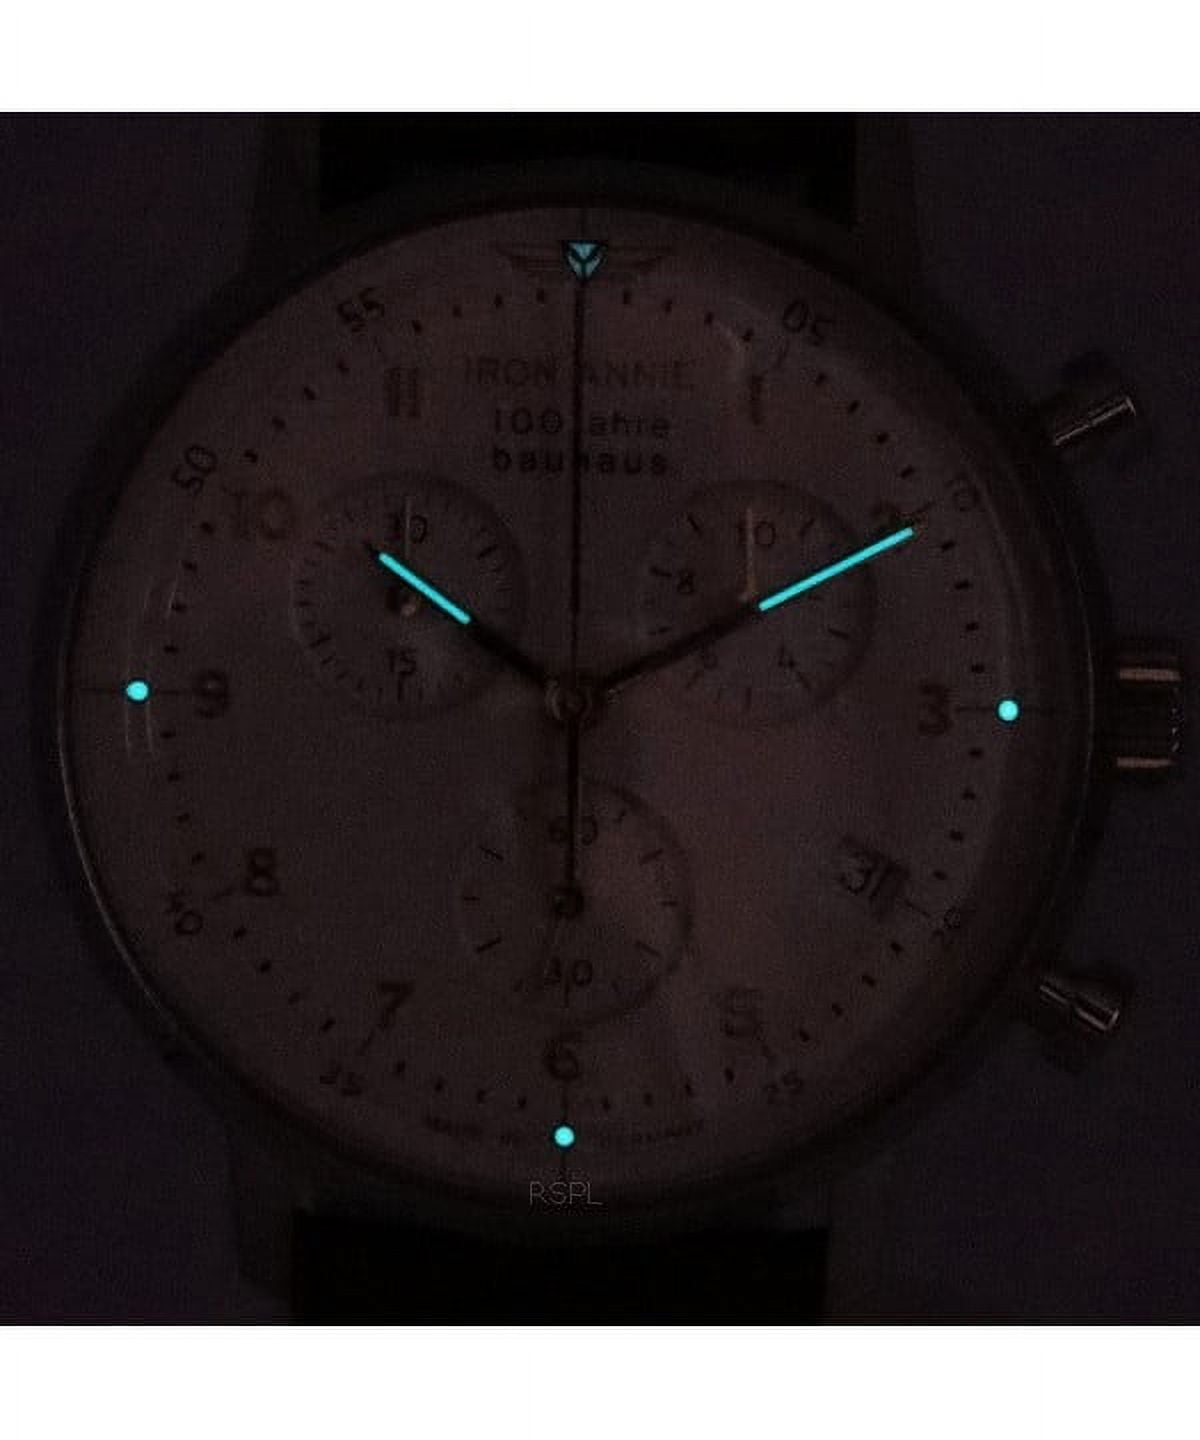 Iron Annie 100 Jahre Bauhaus Chronograph White Dial Quartz 50964 Men's  Watch